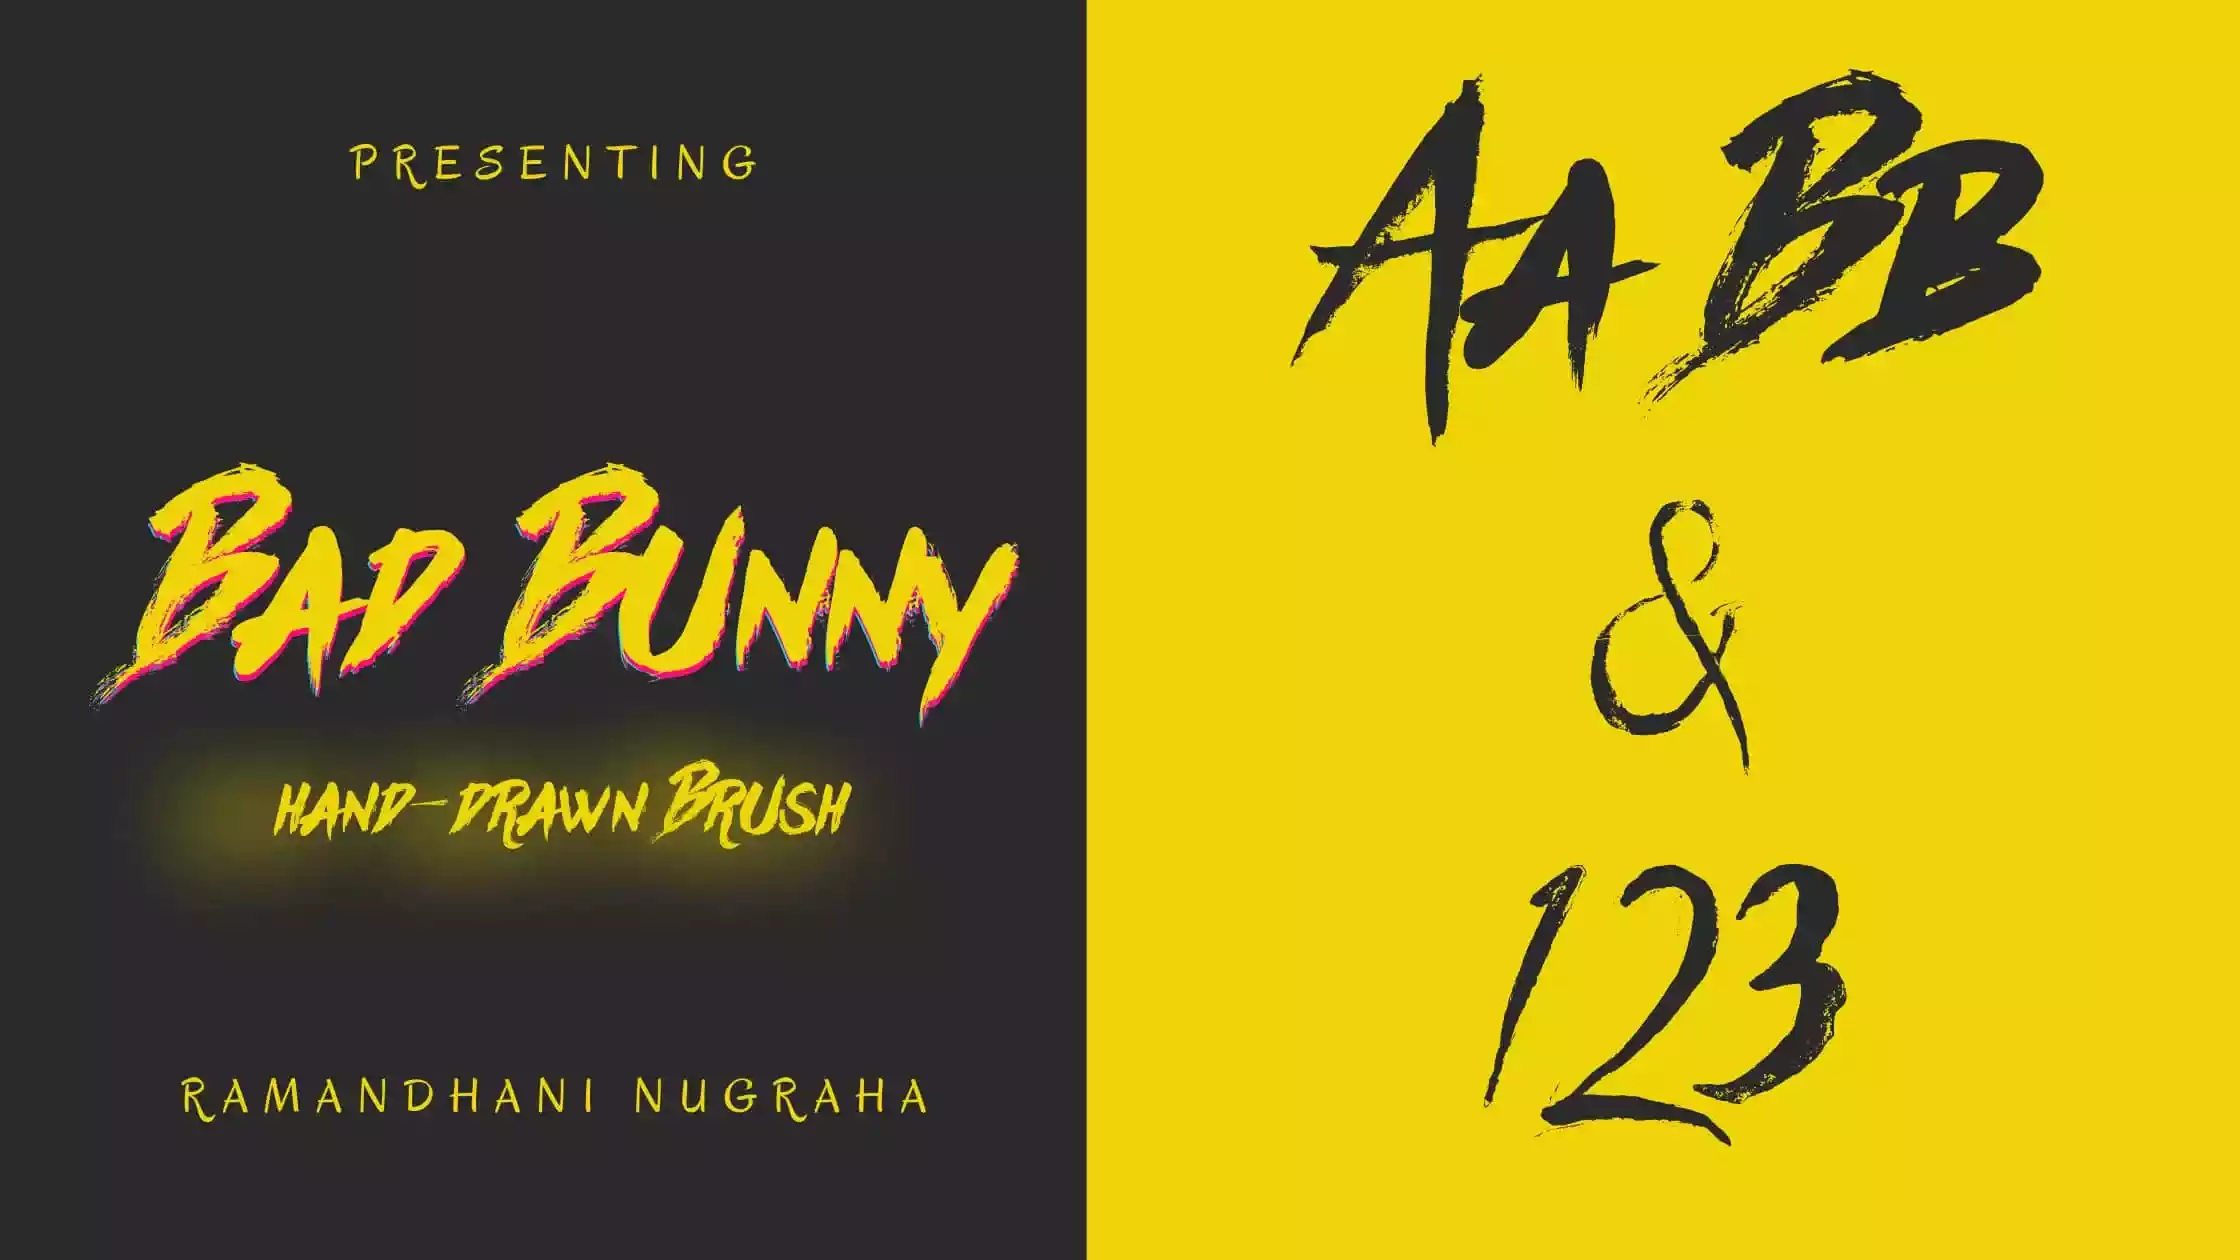 Bad Bunny Font Download